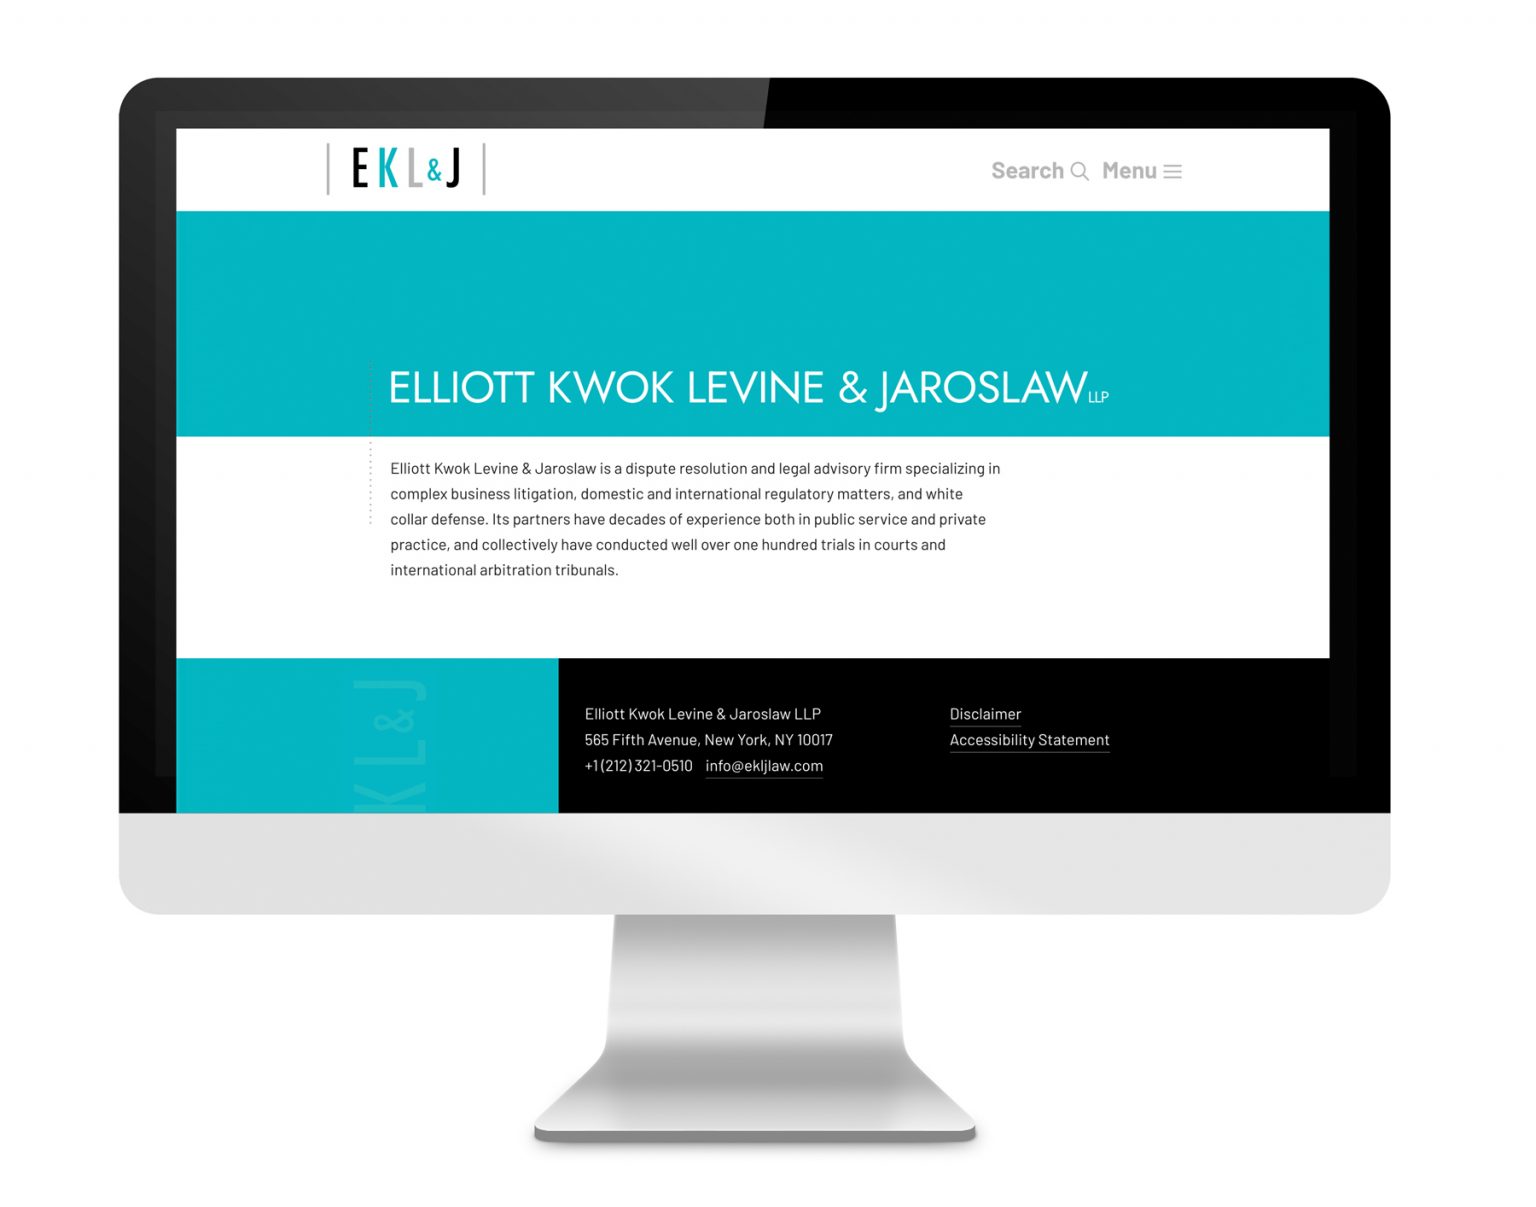 Elliott Kwok Levine & Jaroslaw website designed by DLS Design